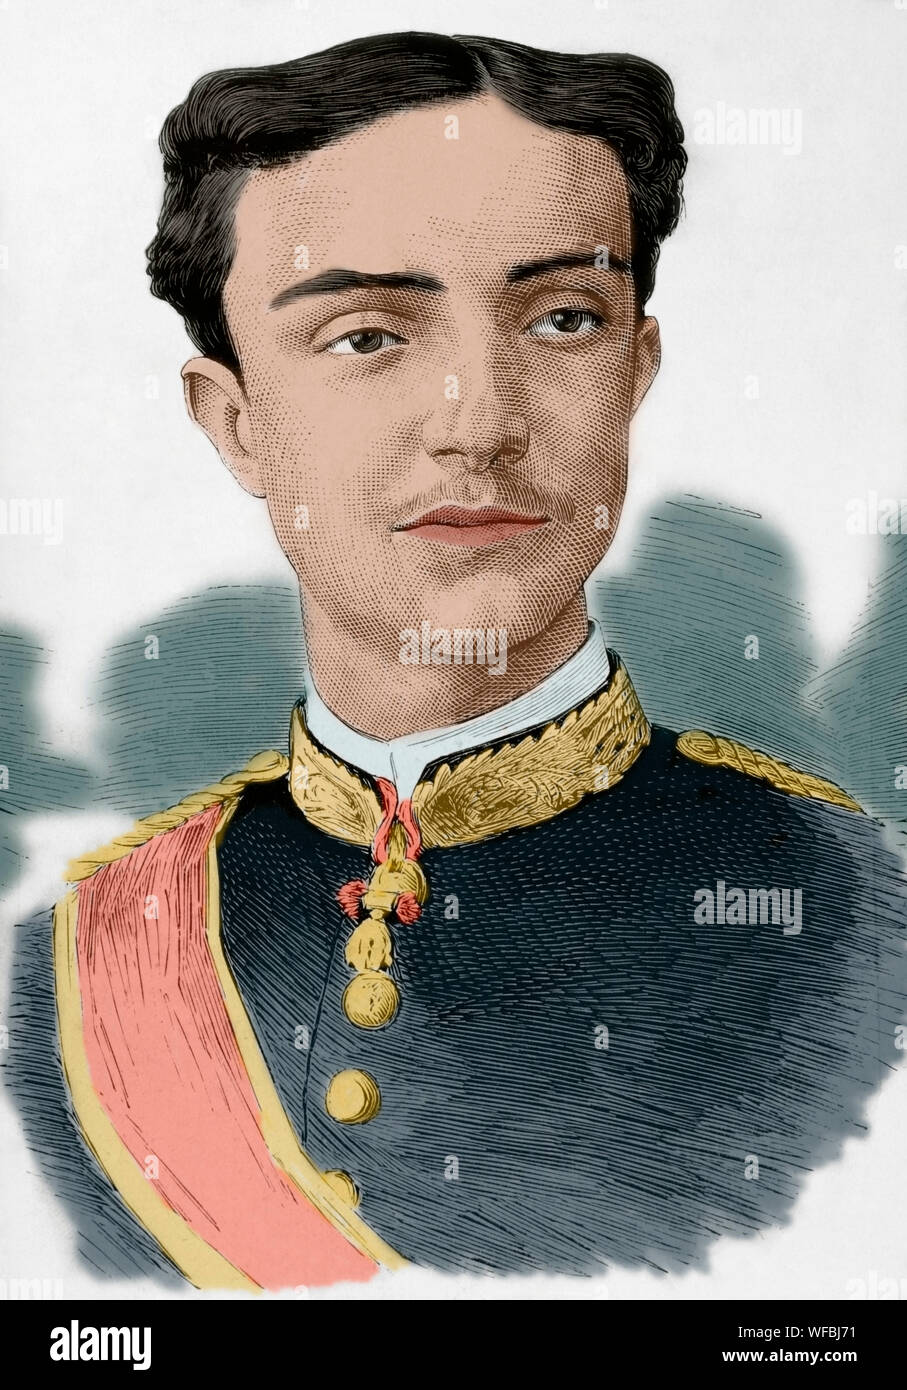 Alfonso XII (1857-1885). König von Spanien (1874-1885). Porträt. Gravur. La Ilustracion Española y Americana, 22. März 1876. Später Färbung. Stockfoto